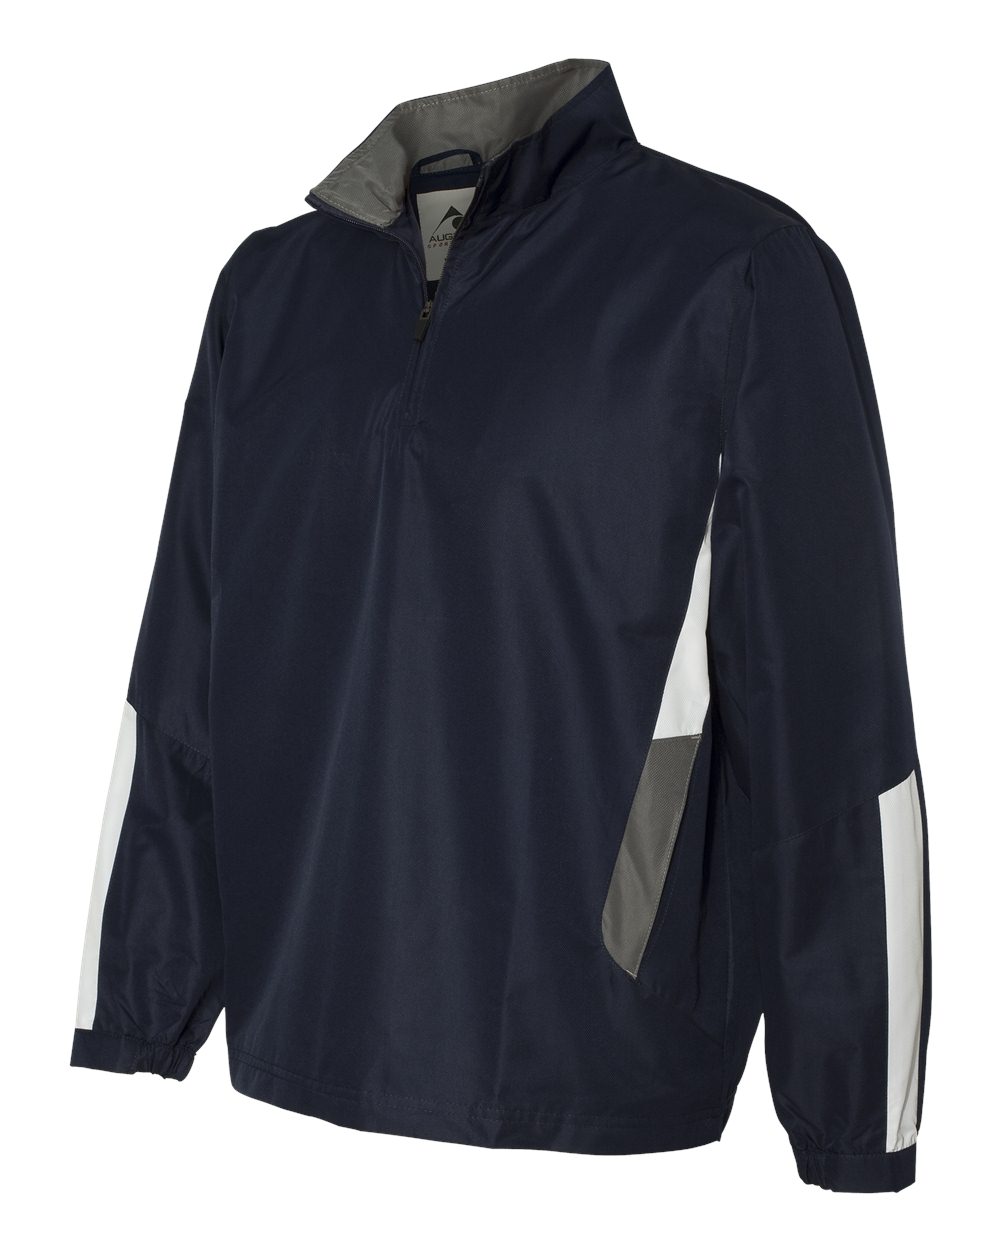 Augusta Sportswear Driver Diamond Tech Half-Zip Pullover - 3720